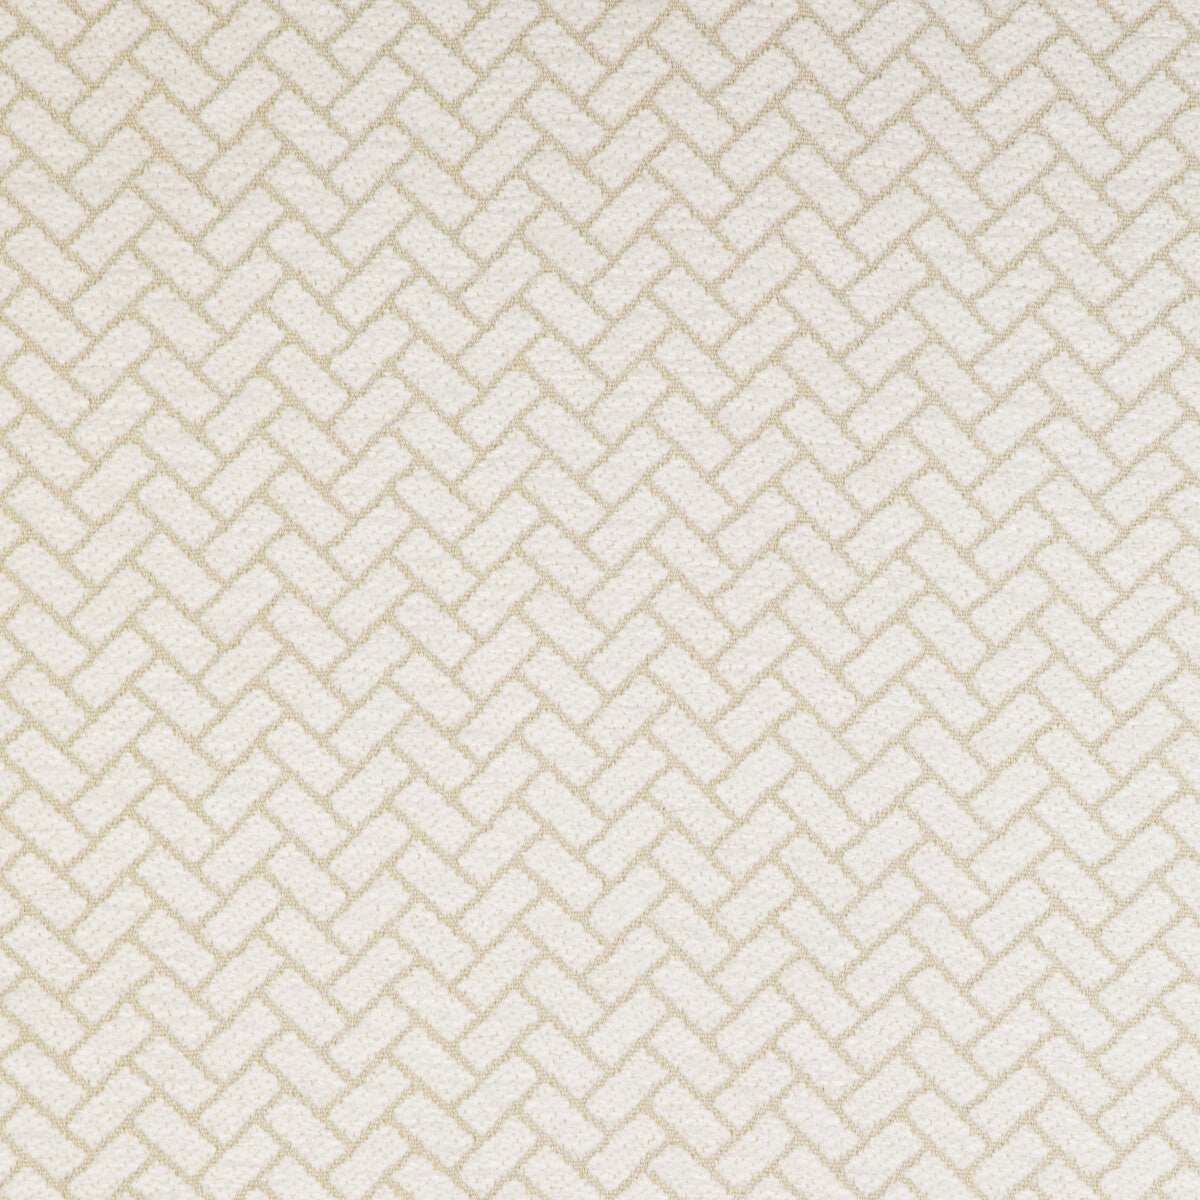 Kravet Smart fabric in 37003-1 color - pattern 37003.1.0 - by Kravet Smart in the Pavilion collection